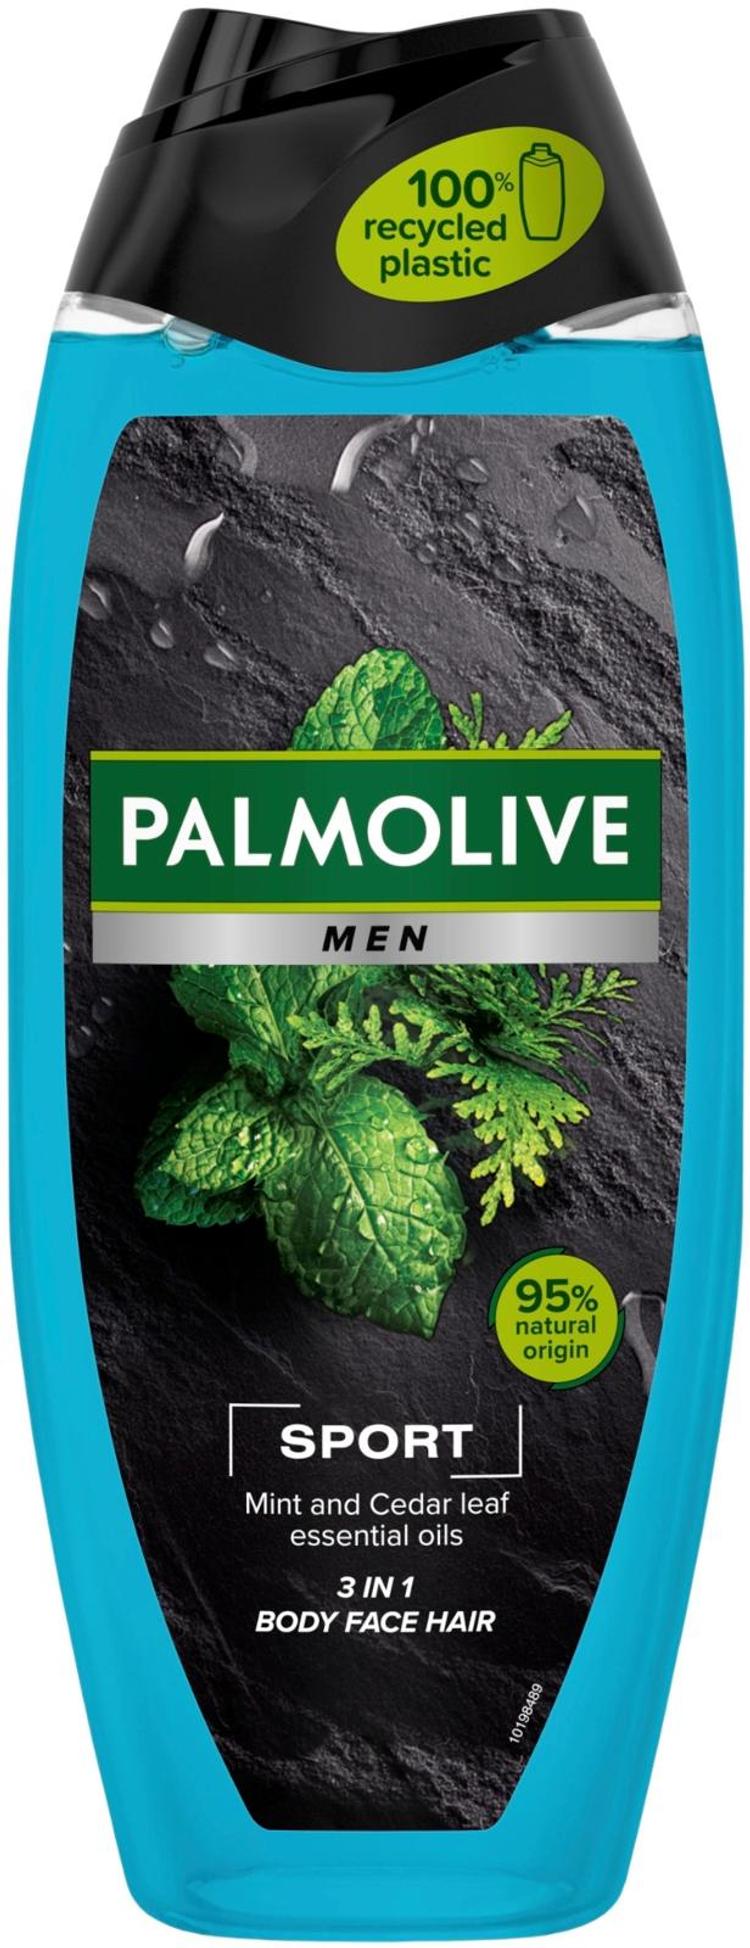 Palmolive Men Sport 3-in-1 suihkusaippua 500ml